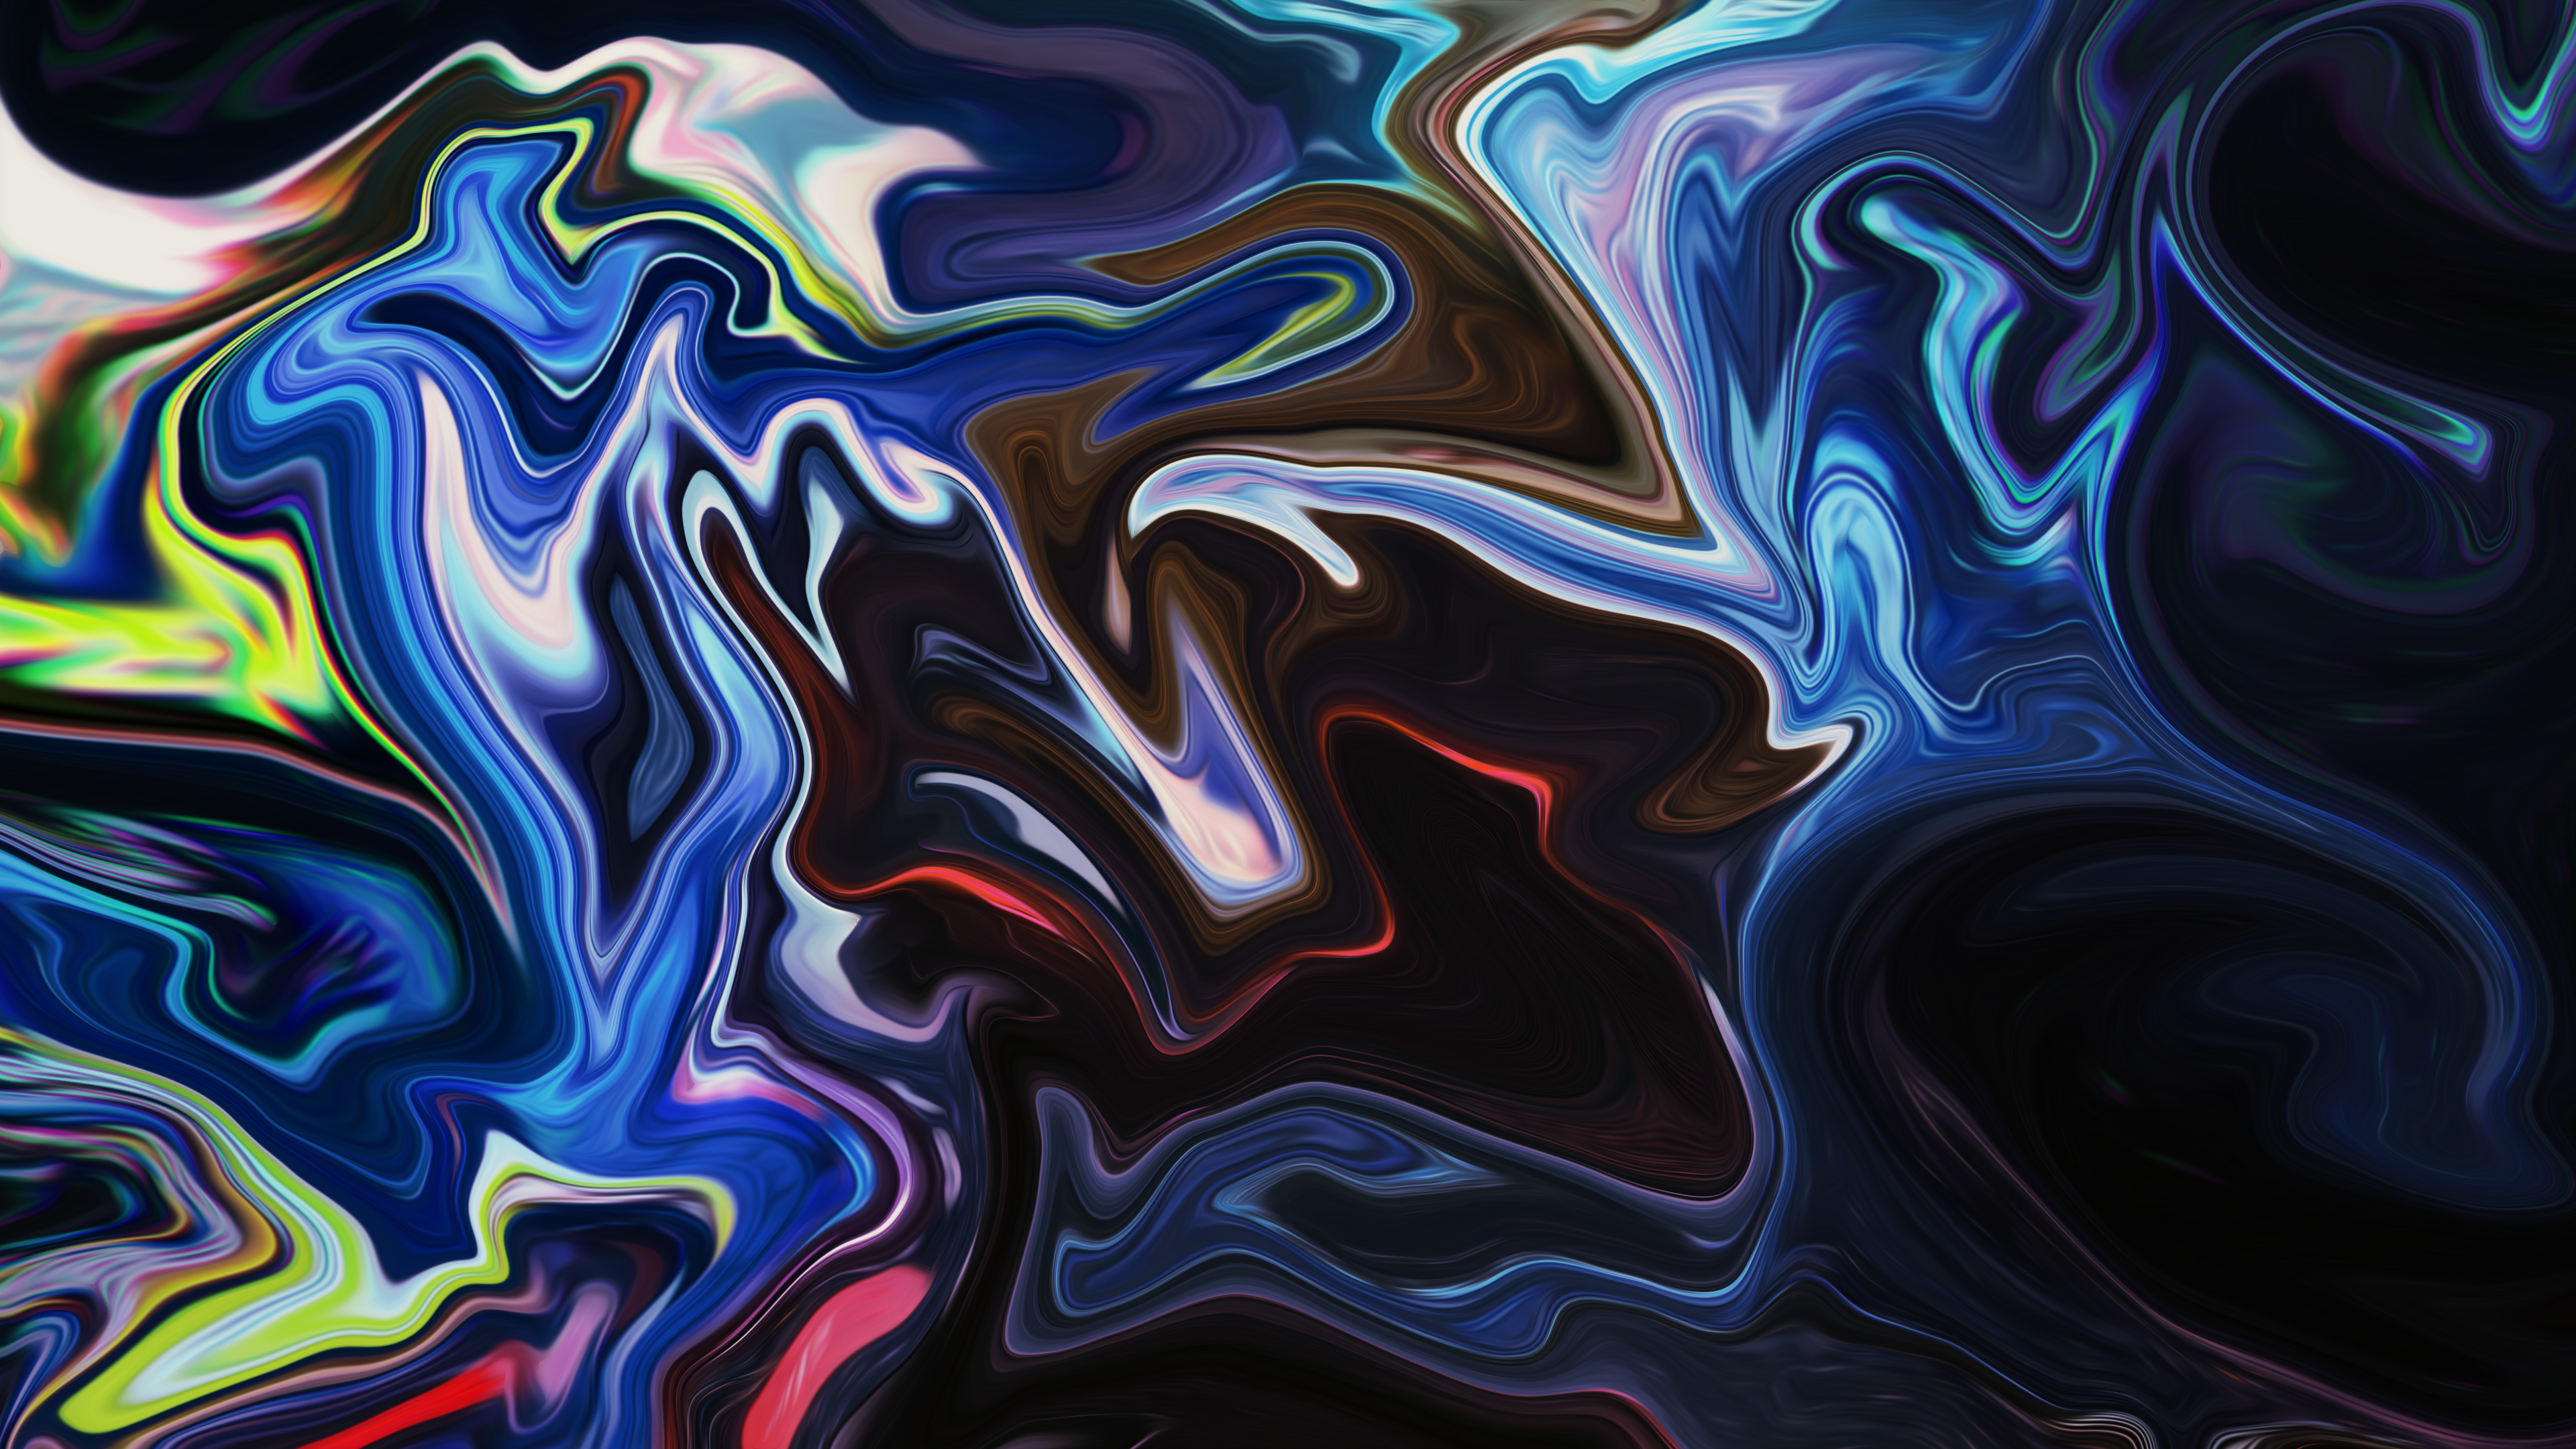 Abstract Shapes Fluid Liquid Artwork Digital Art Paint Brushes Neon 8 K 3840x2160